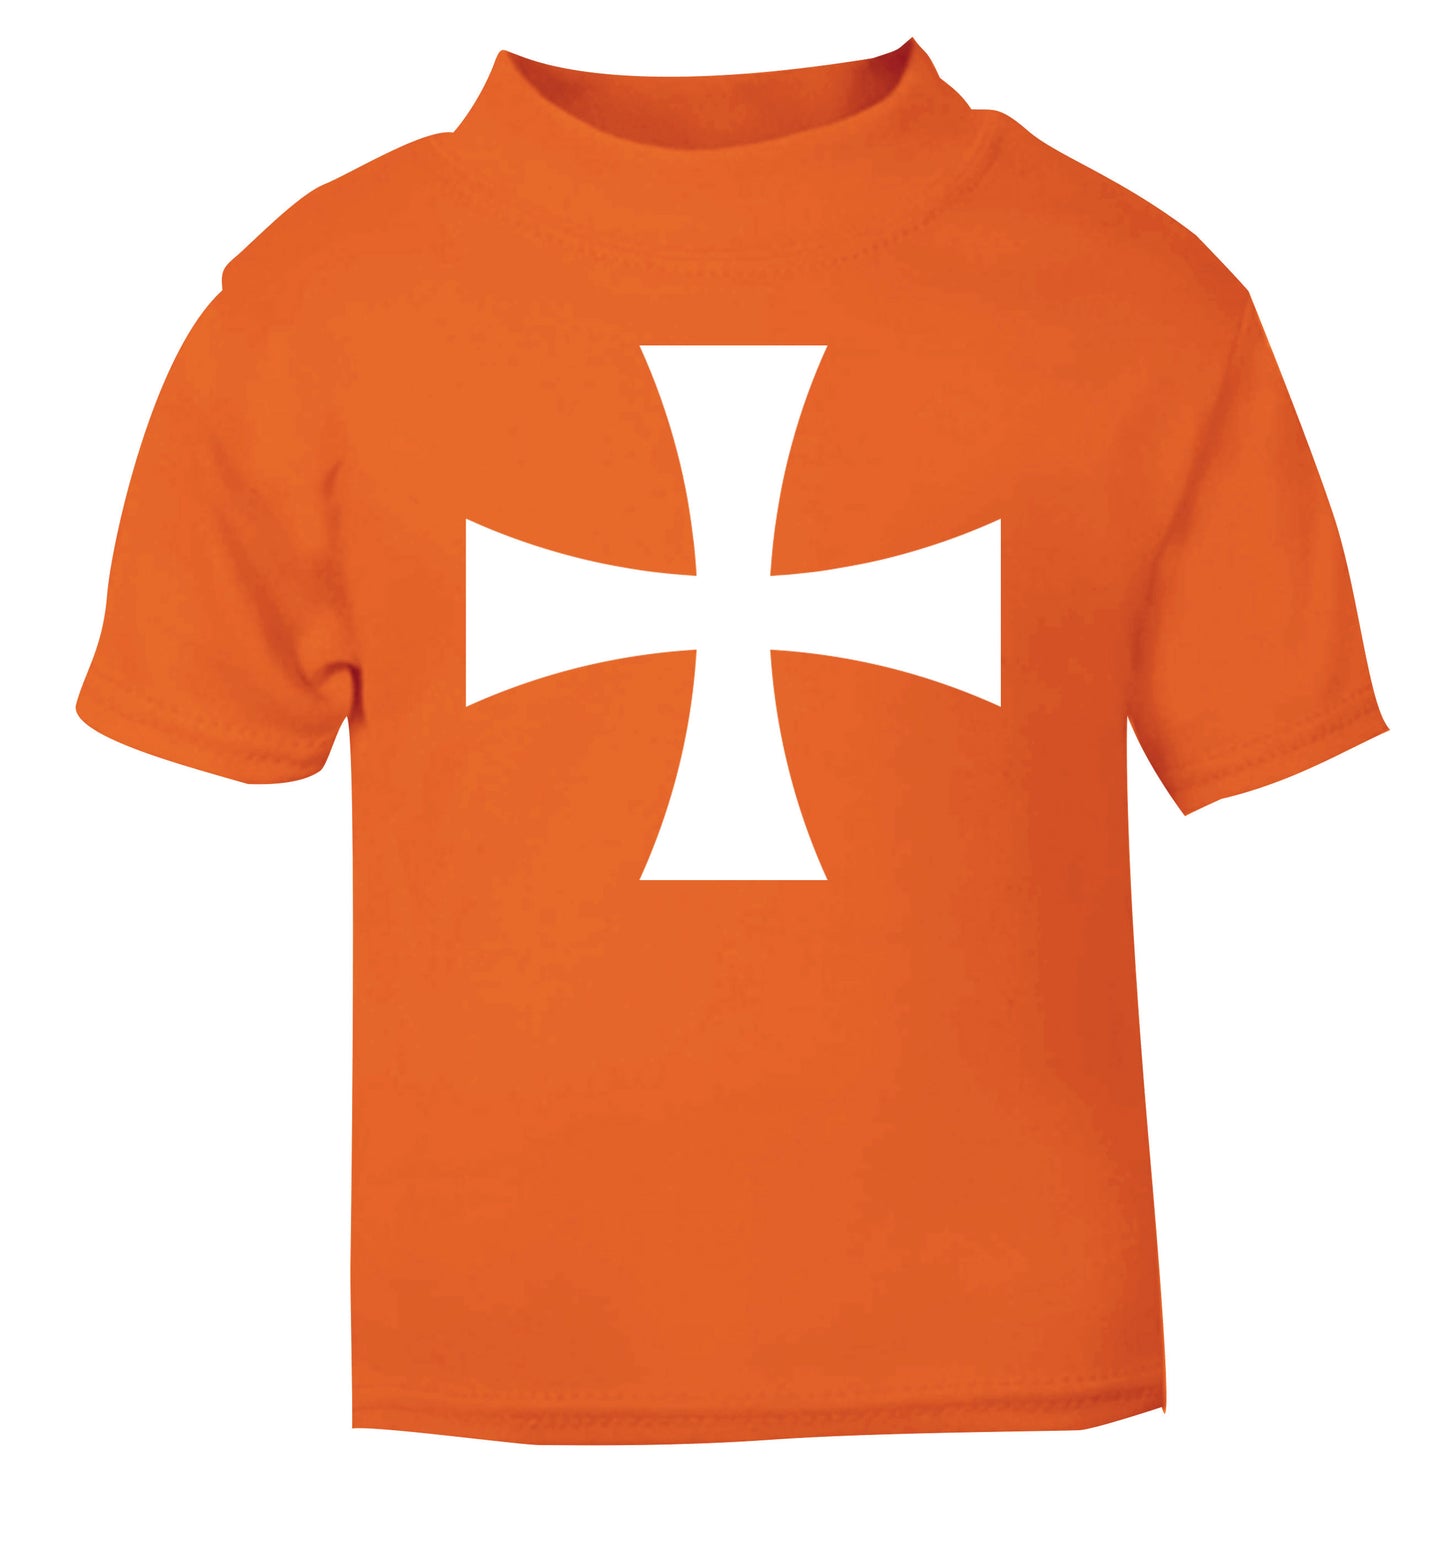 Knights Templar cross orange Baby Toddler Tshirt 2 Years